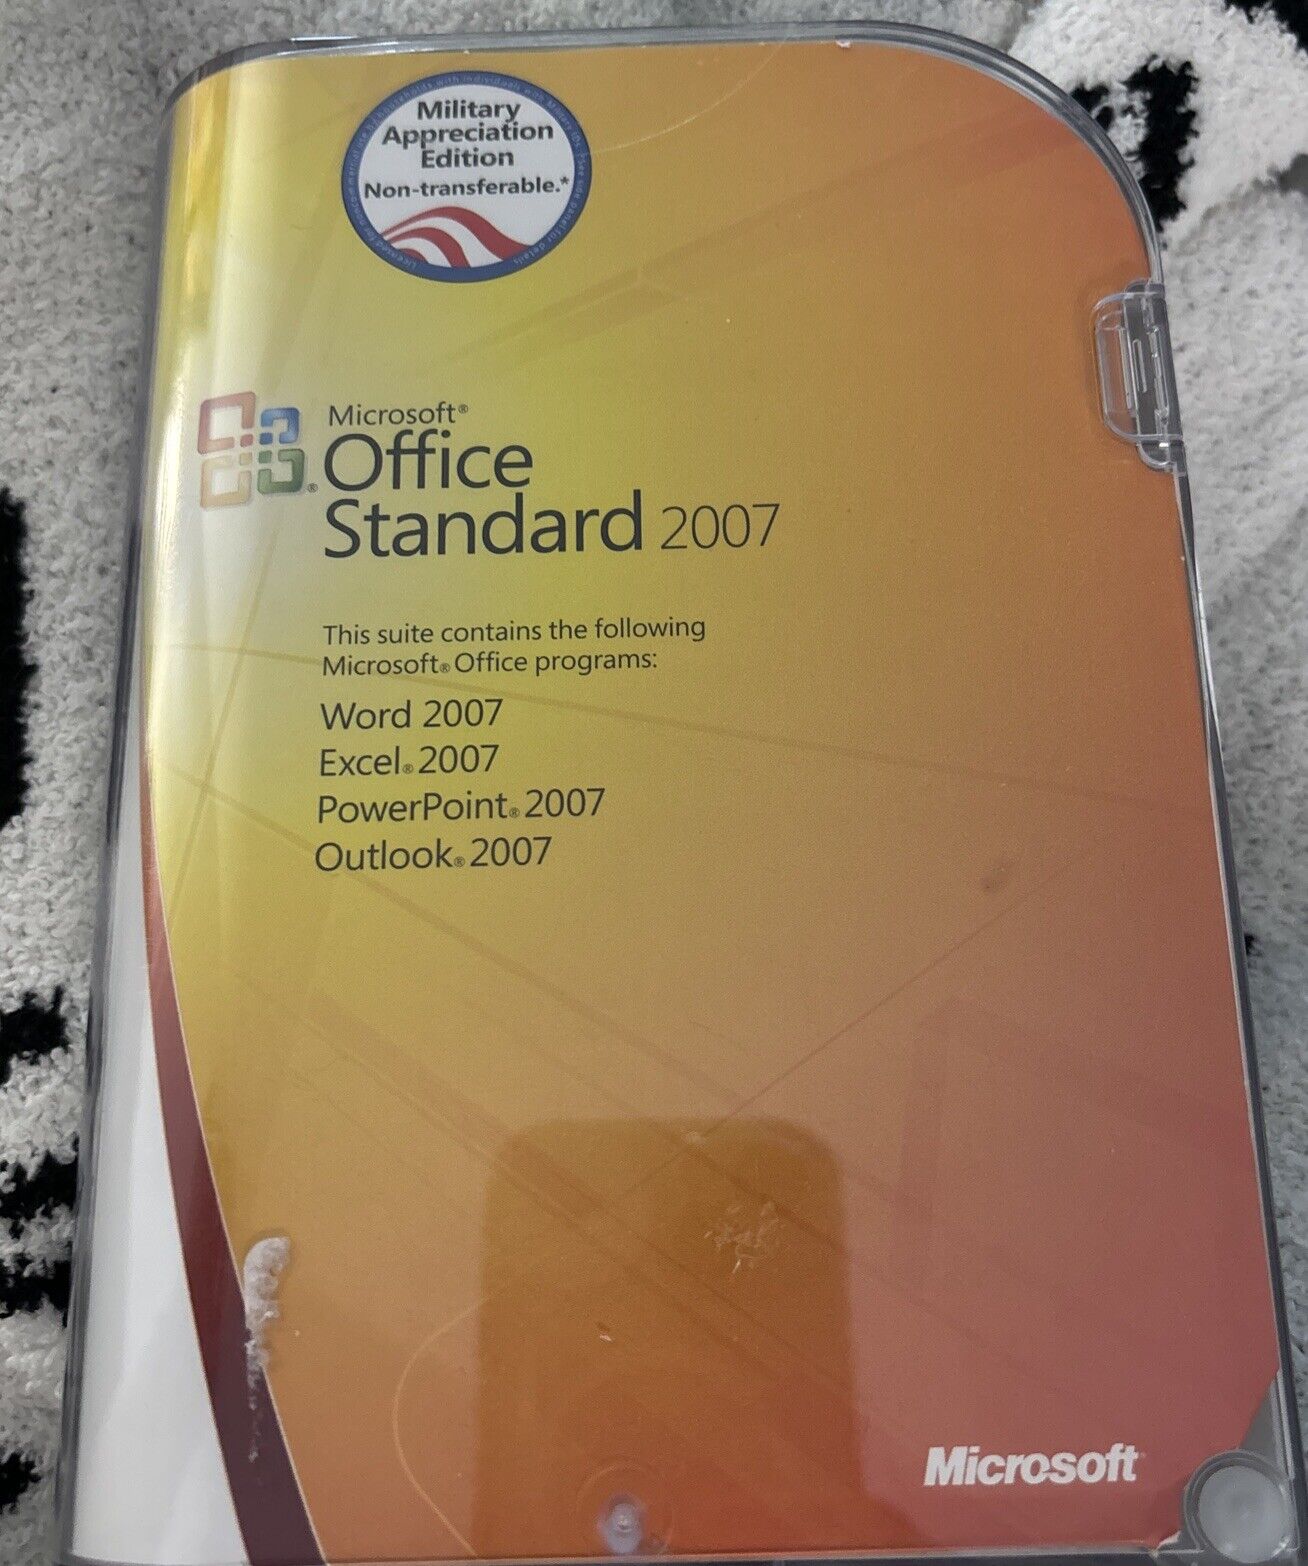 Microsoft Office Standard 2007 Military Appreciation Edition W/ Product Key